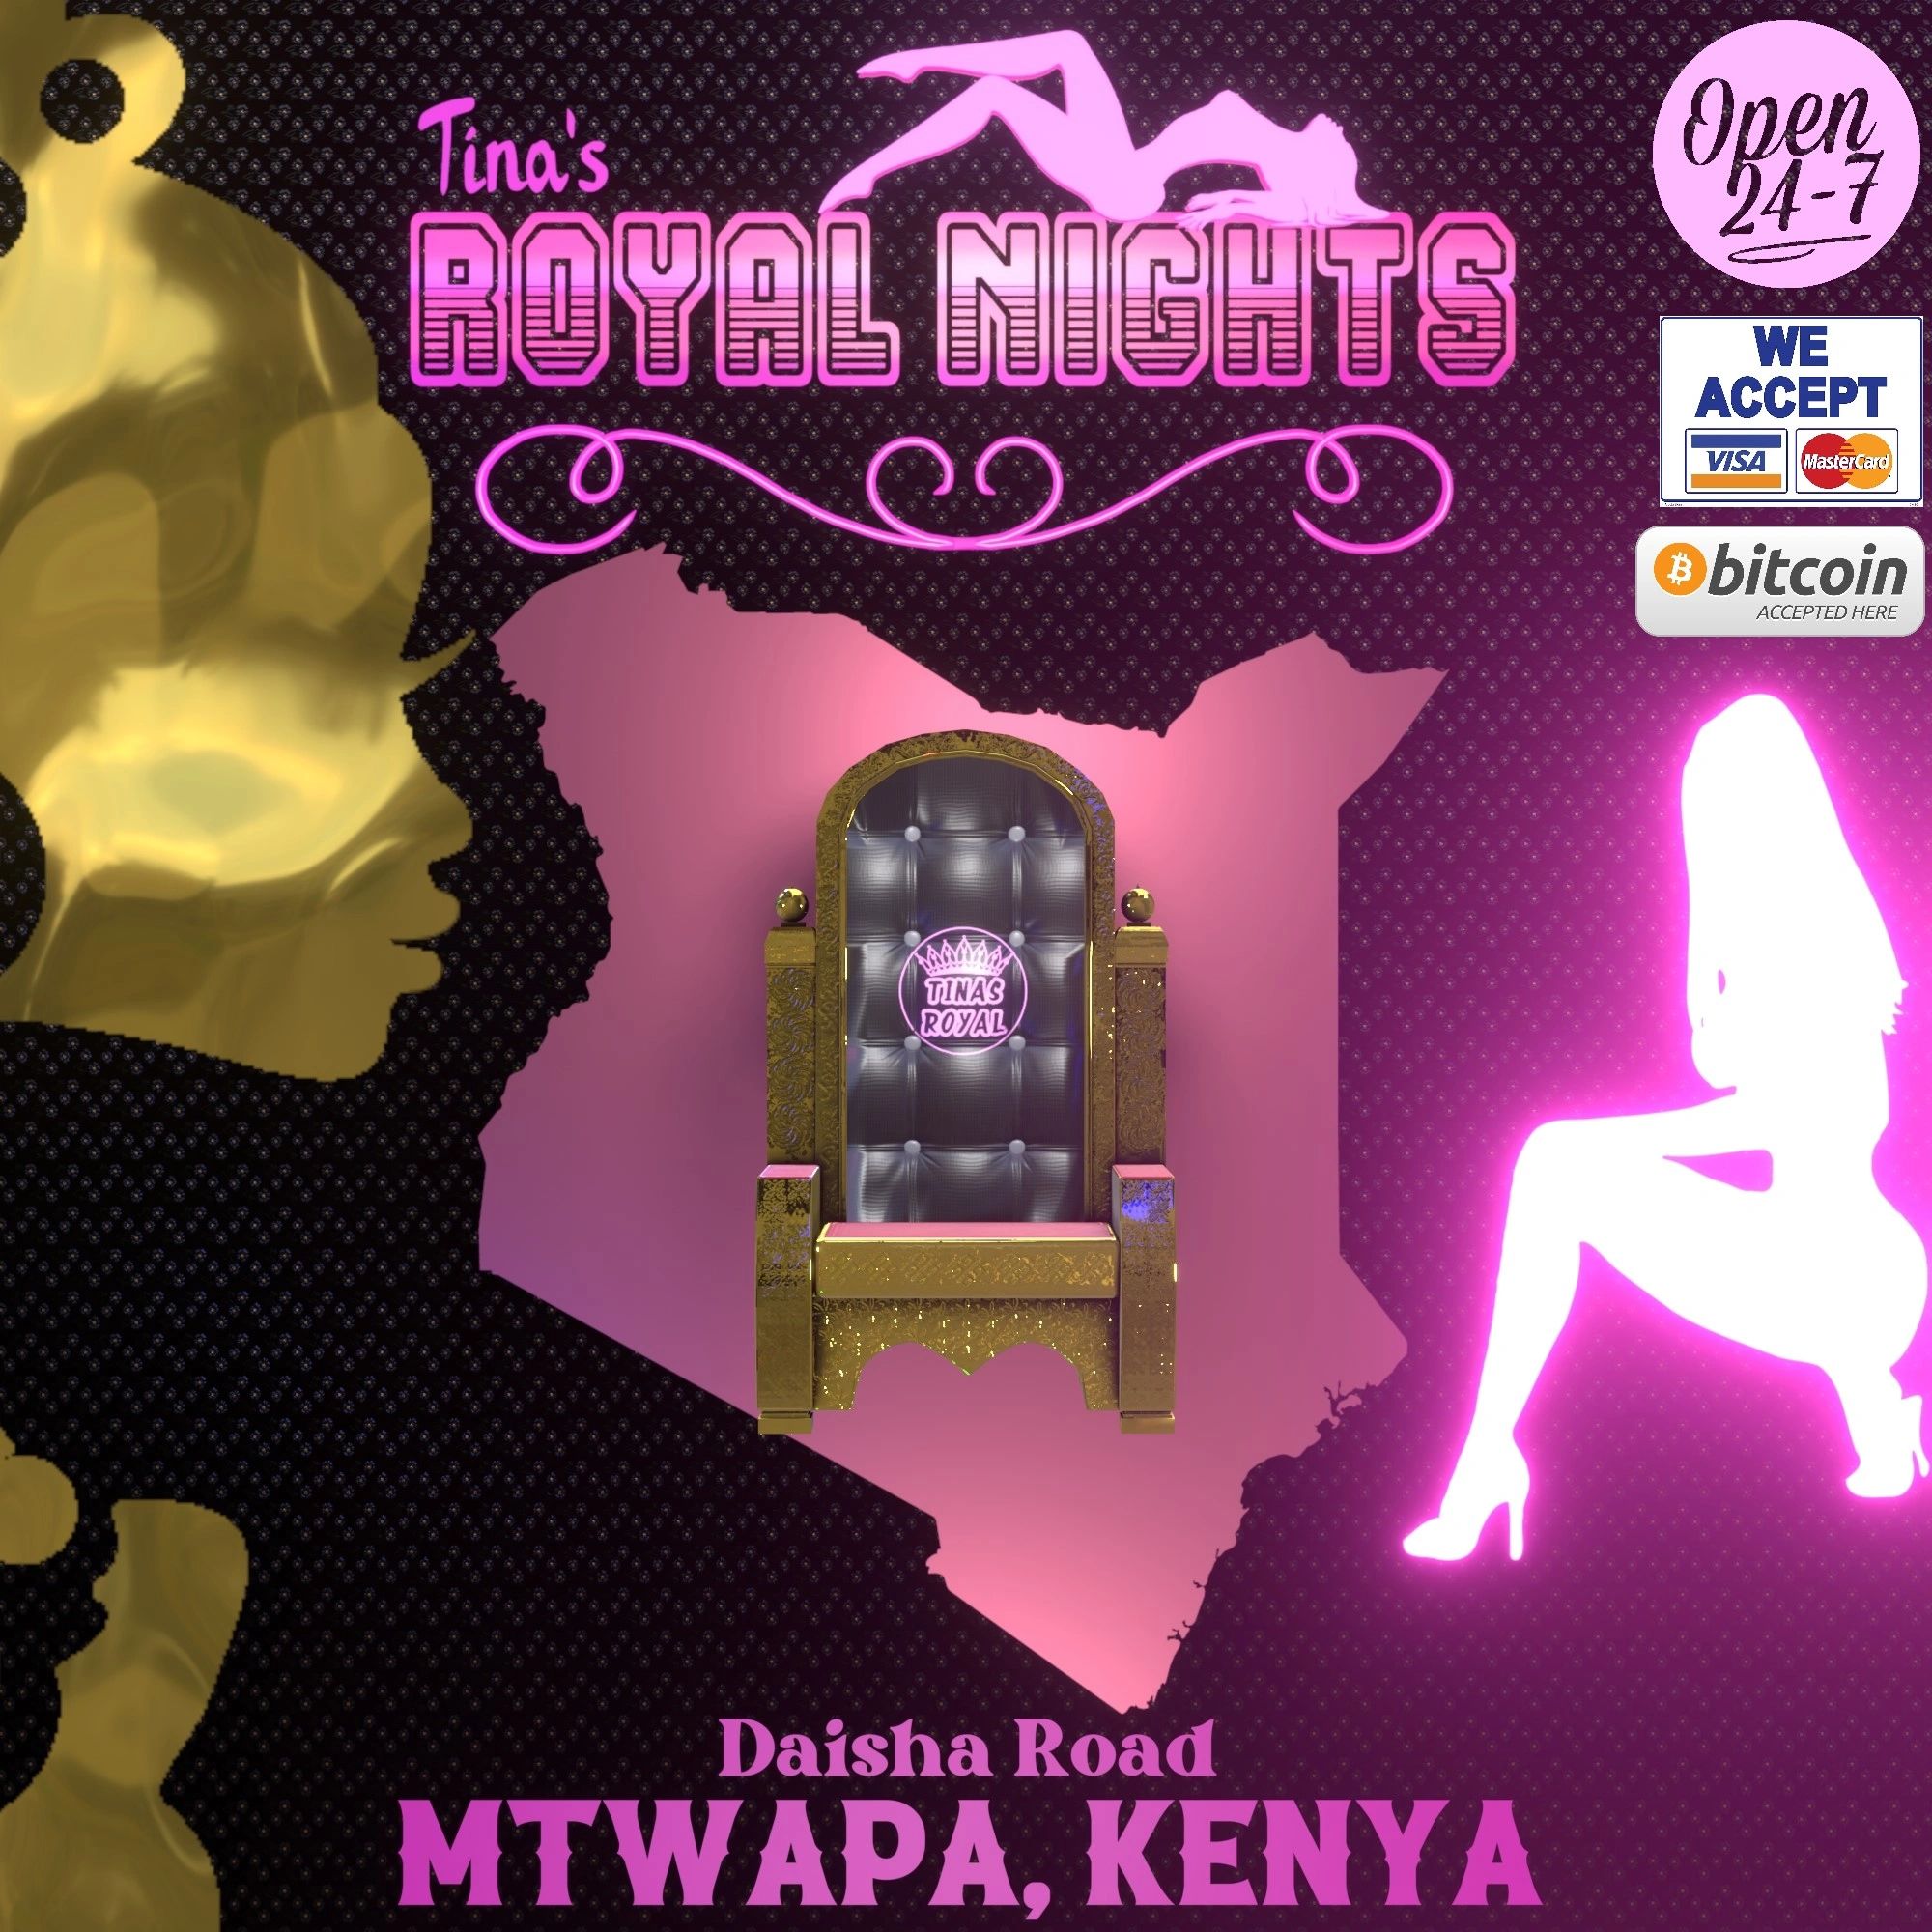 Promotional artwork advertisement for Tina's Royal Nights club located in Mtwapa, Mombasa, Kenya.